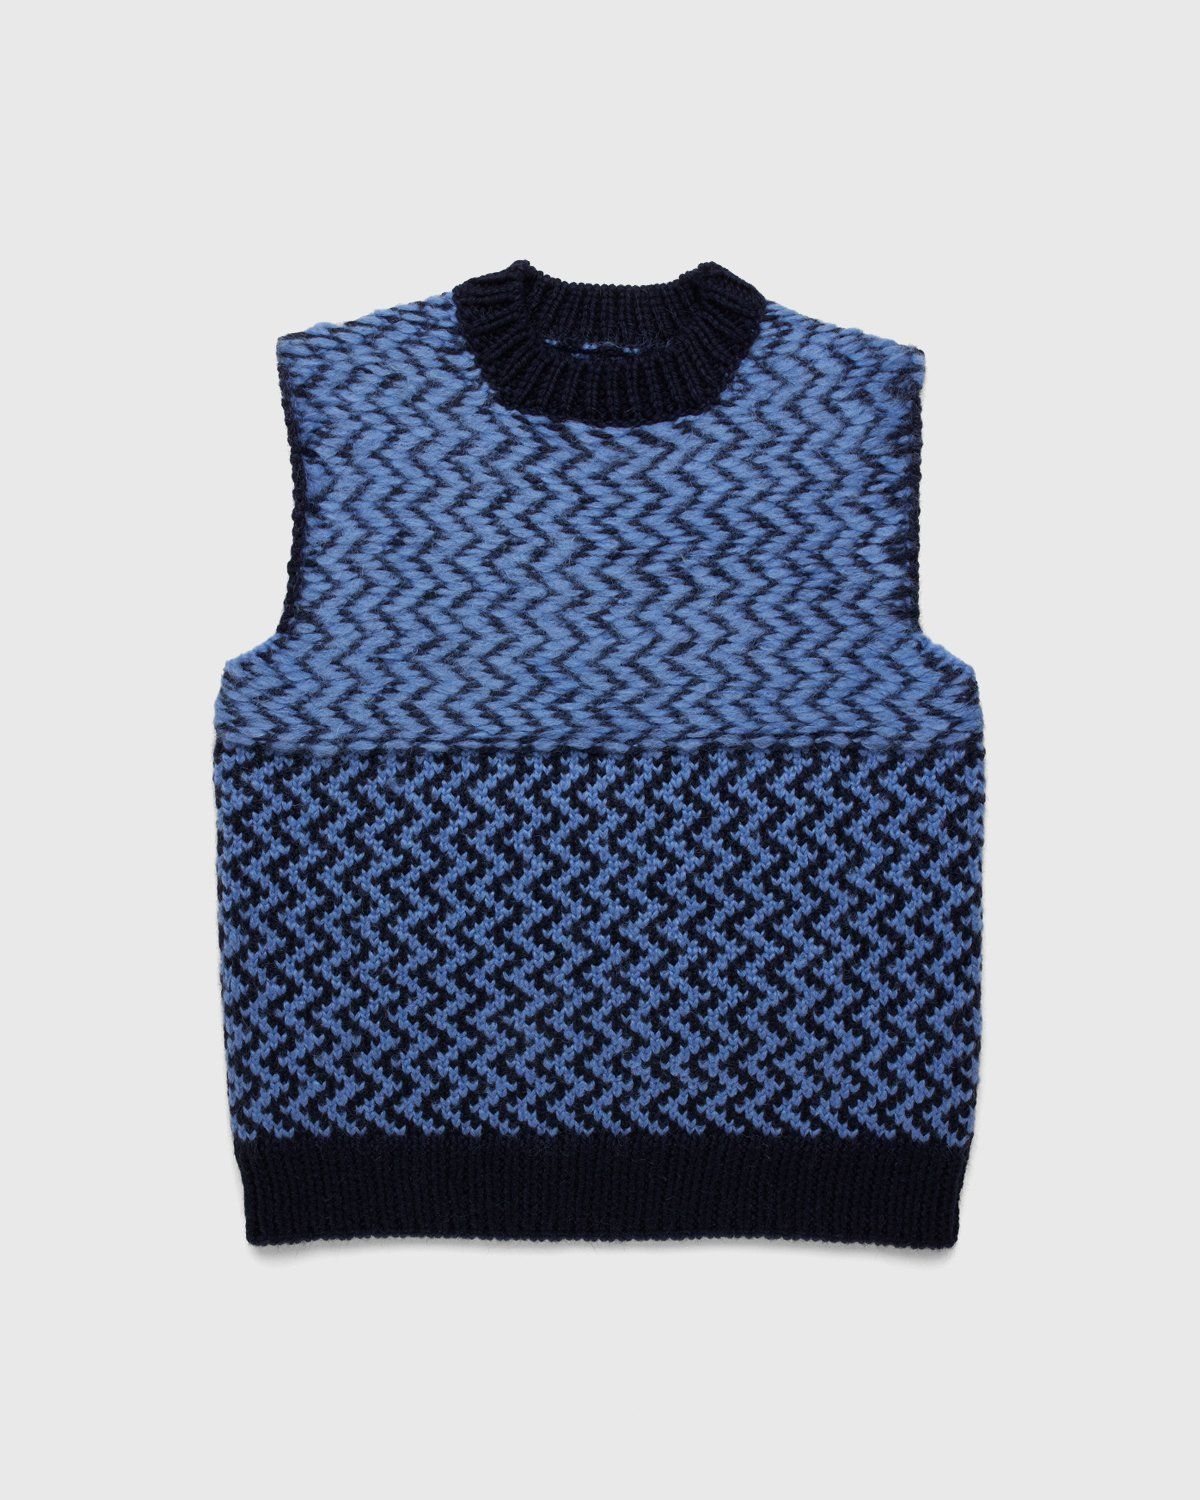 Jil Sander – Vest Knitted Blue | Highsnobiety Shop